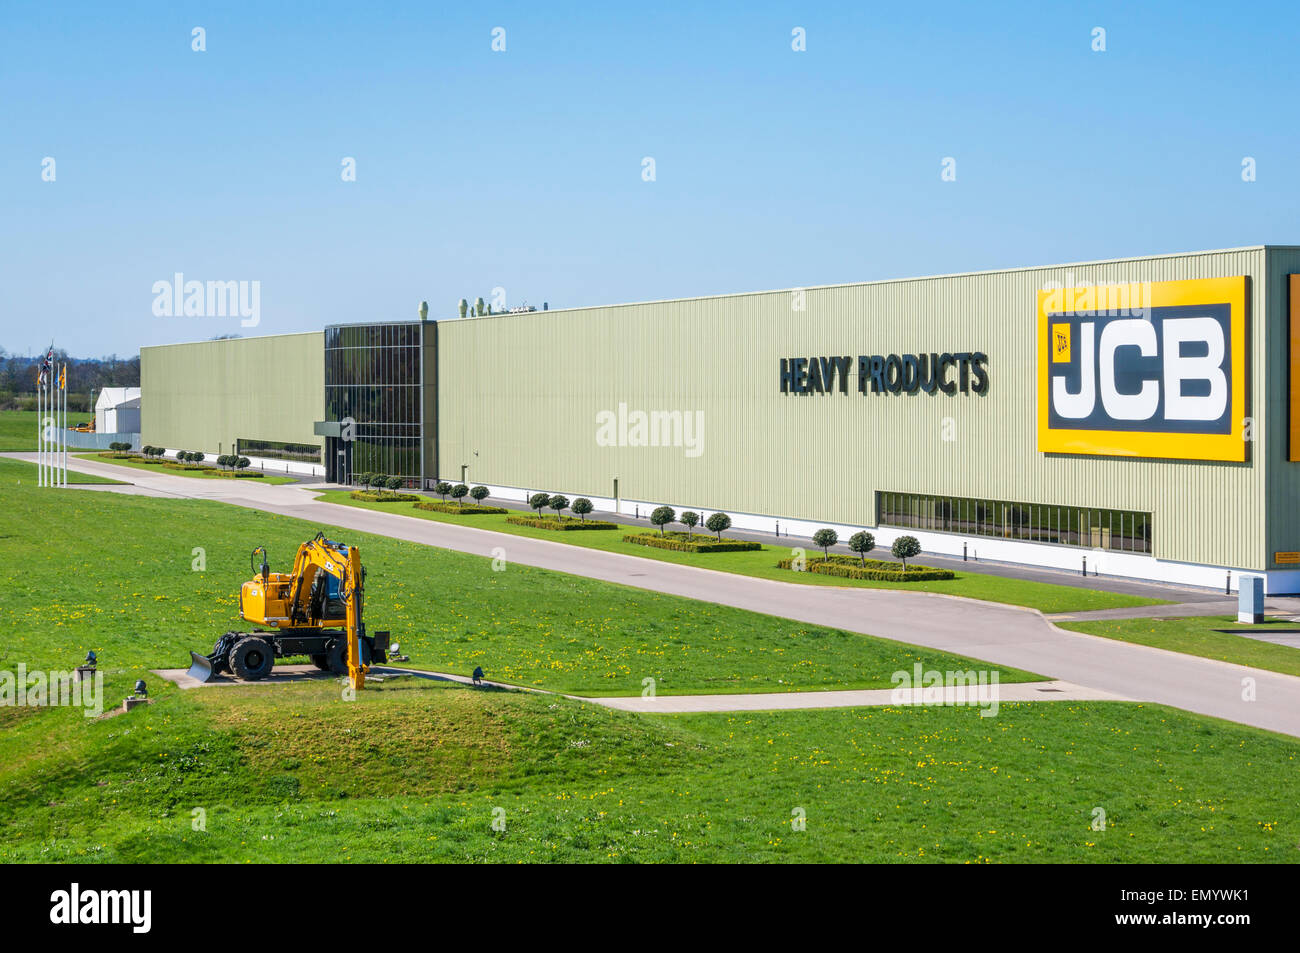 JCB Heavy Products Factory, Beamhurst, Uttoxeter, Staffordshire, England, UK, GB EU, Europe Stock Photo